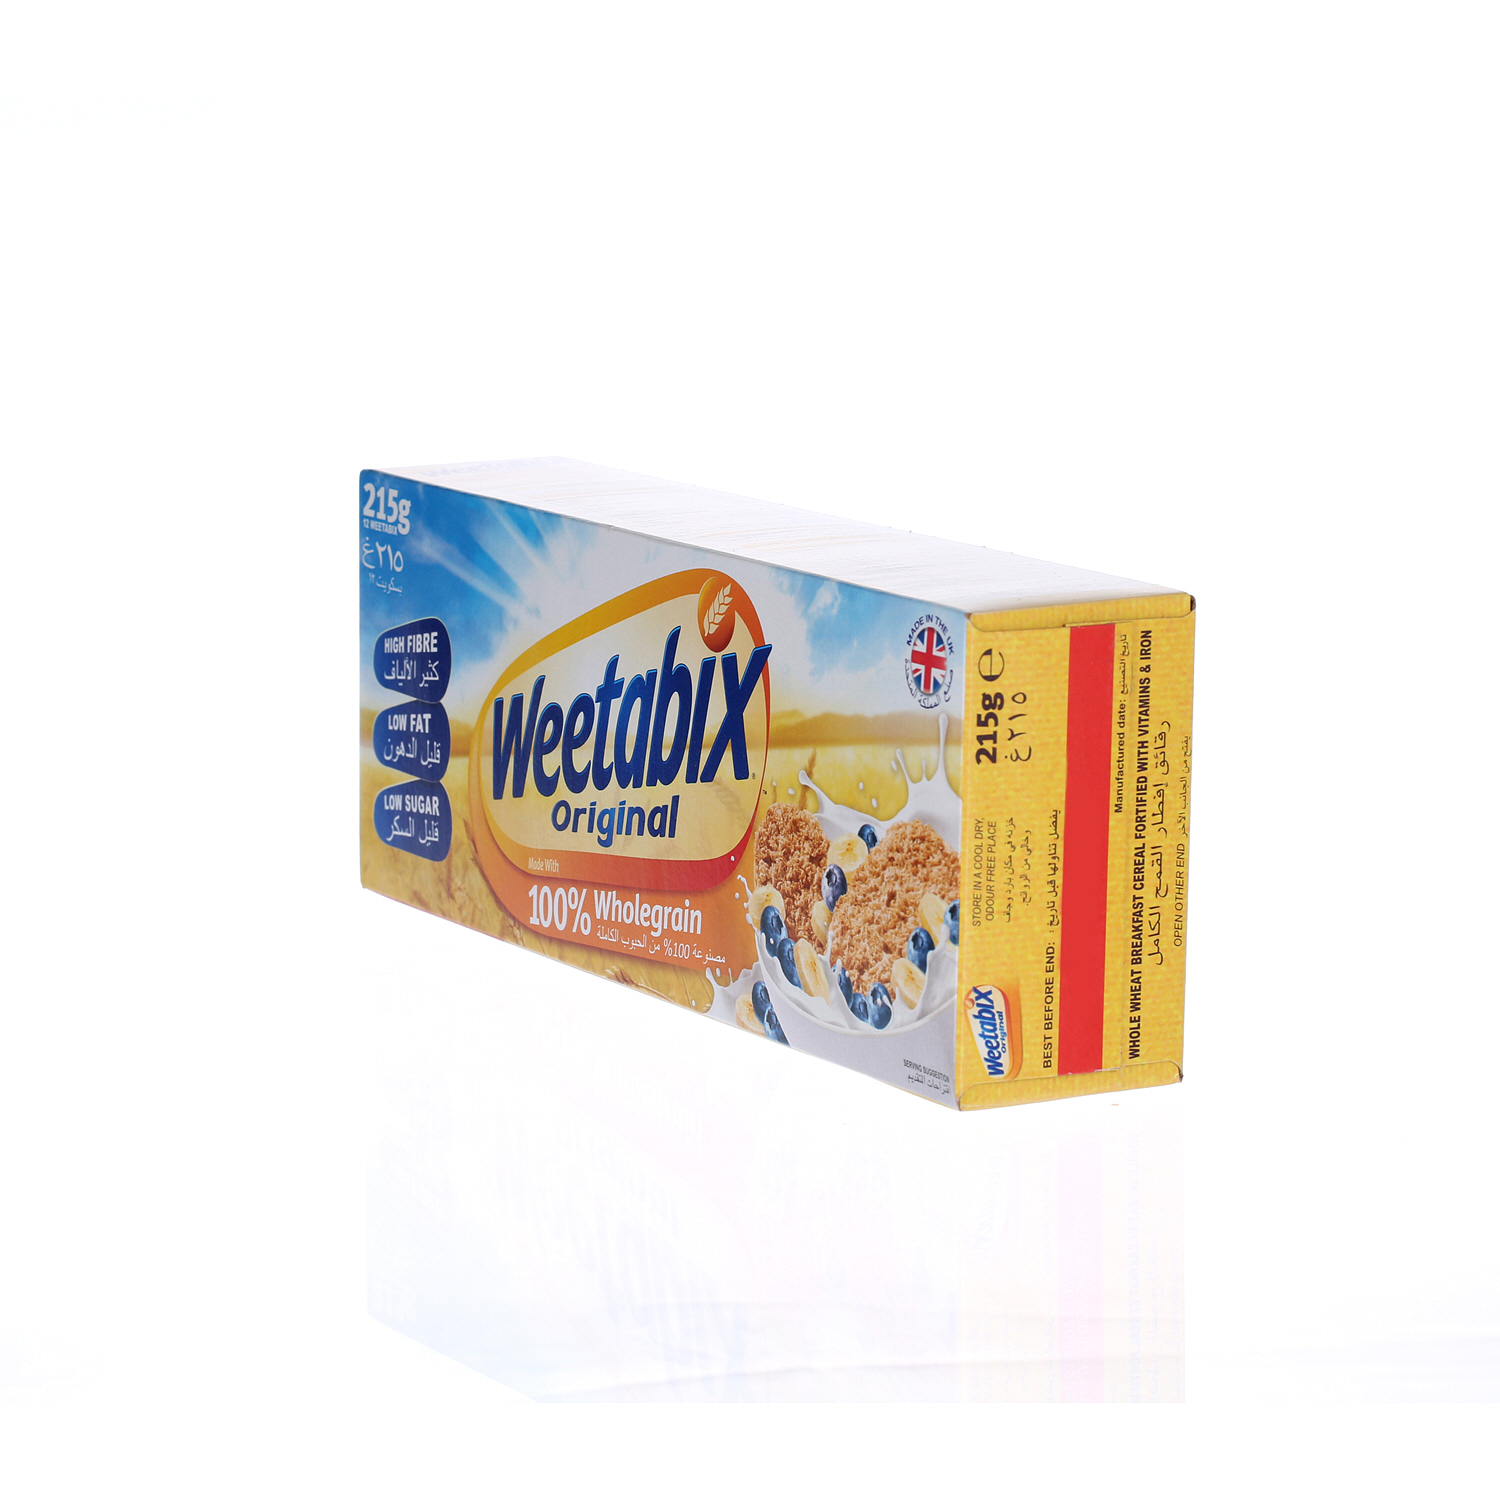 Weetabix Cereal 215gm